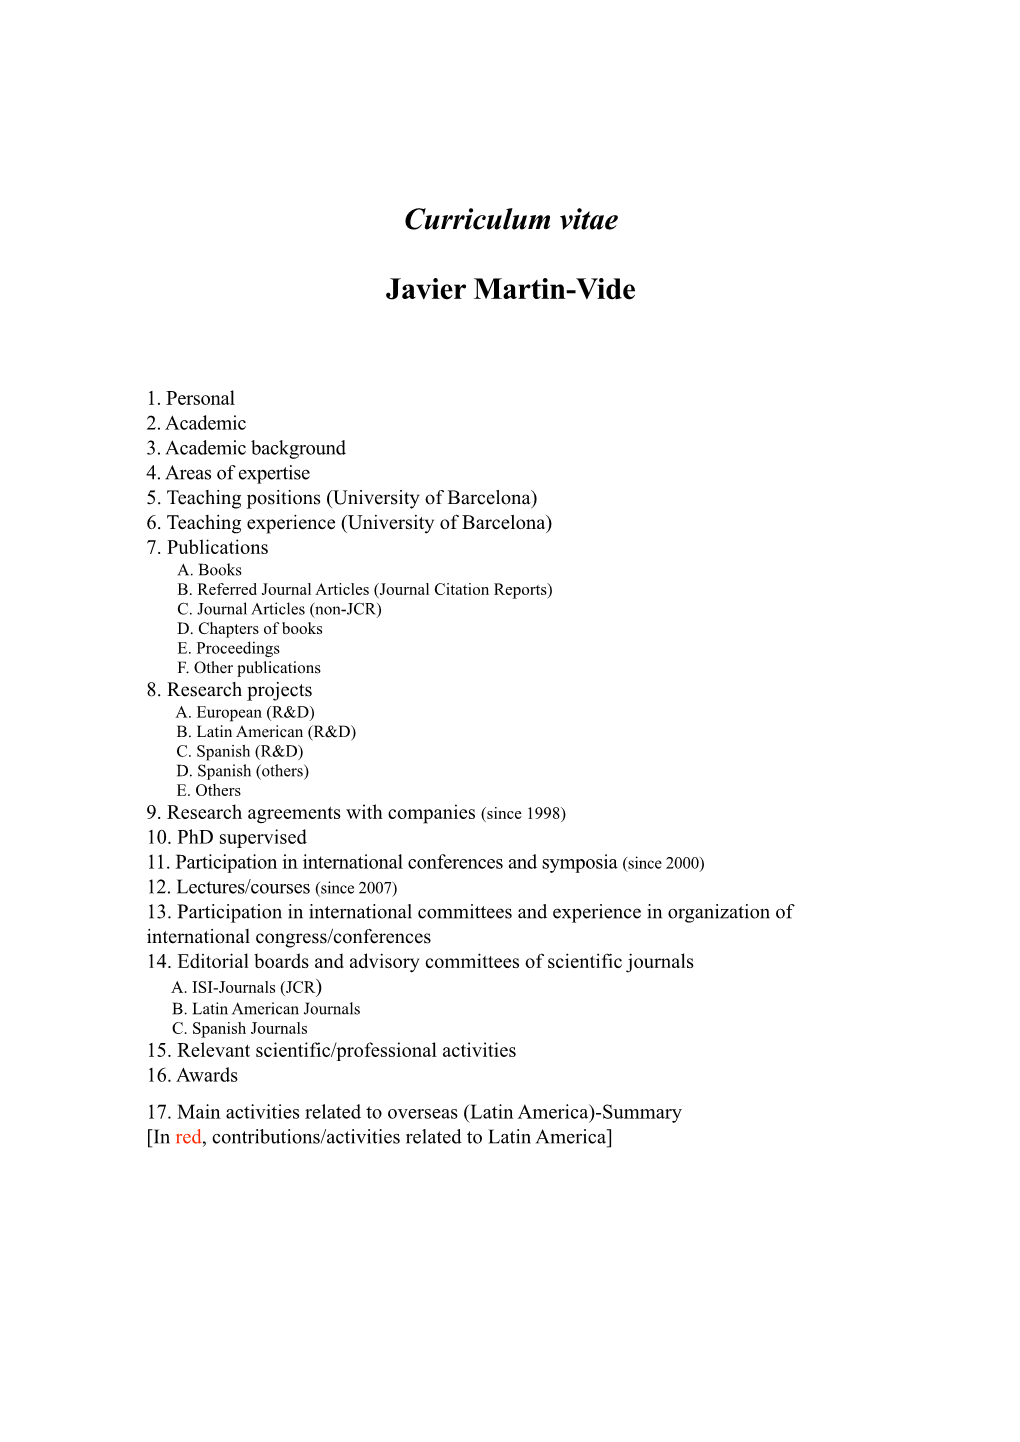 Curriculum Vitae Javier Martin-Vide